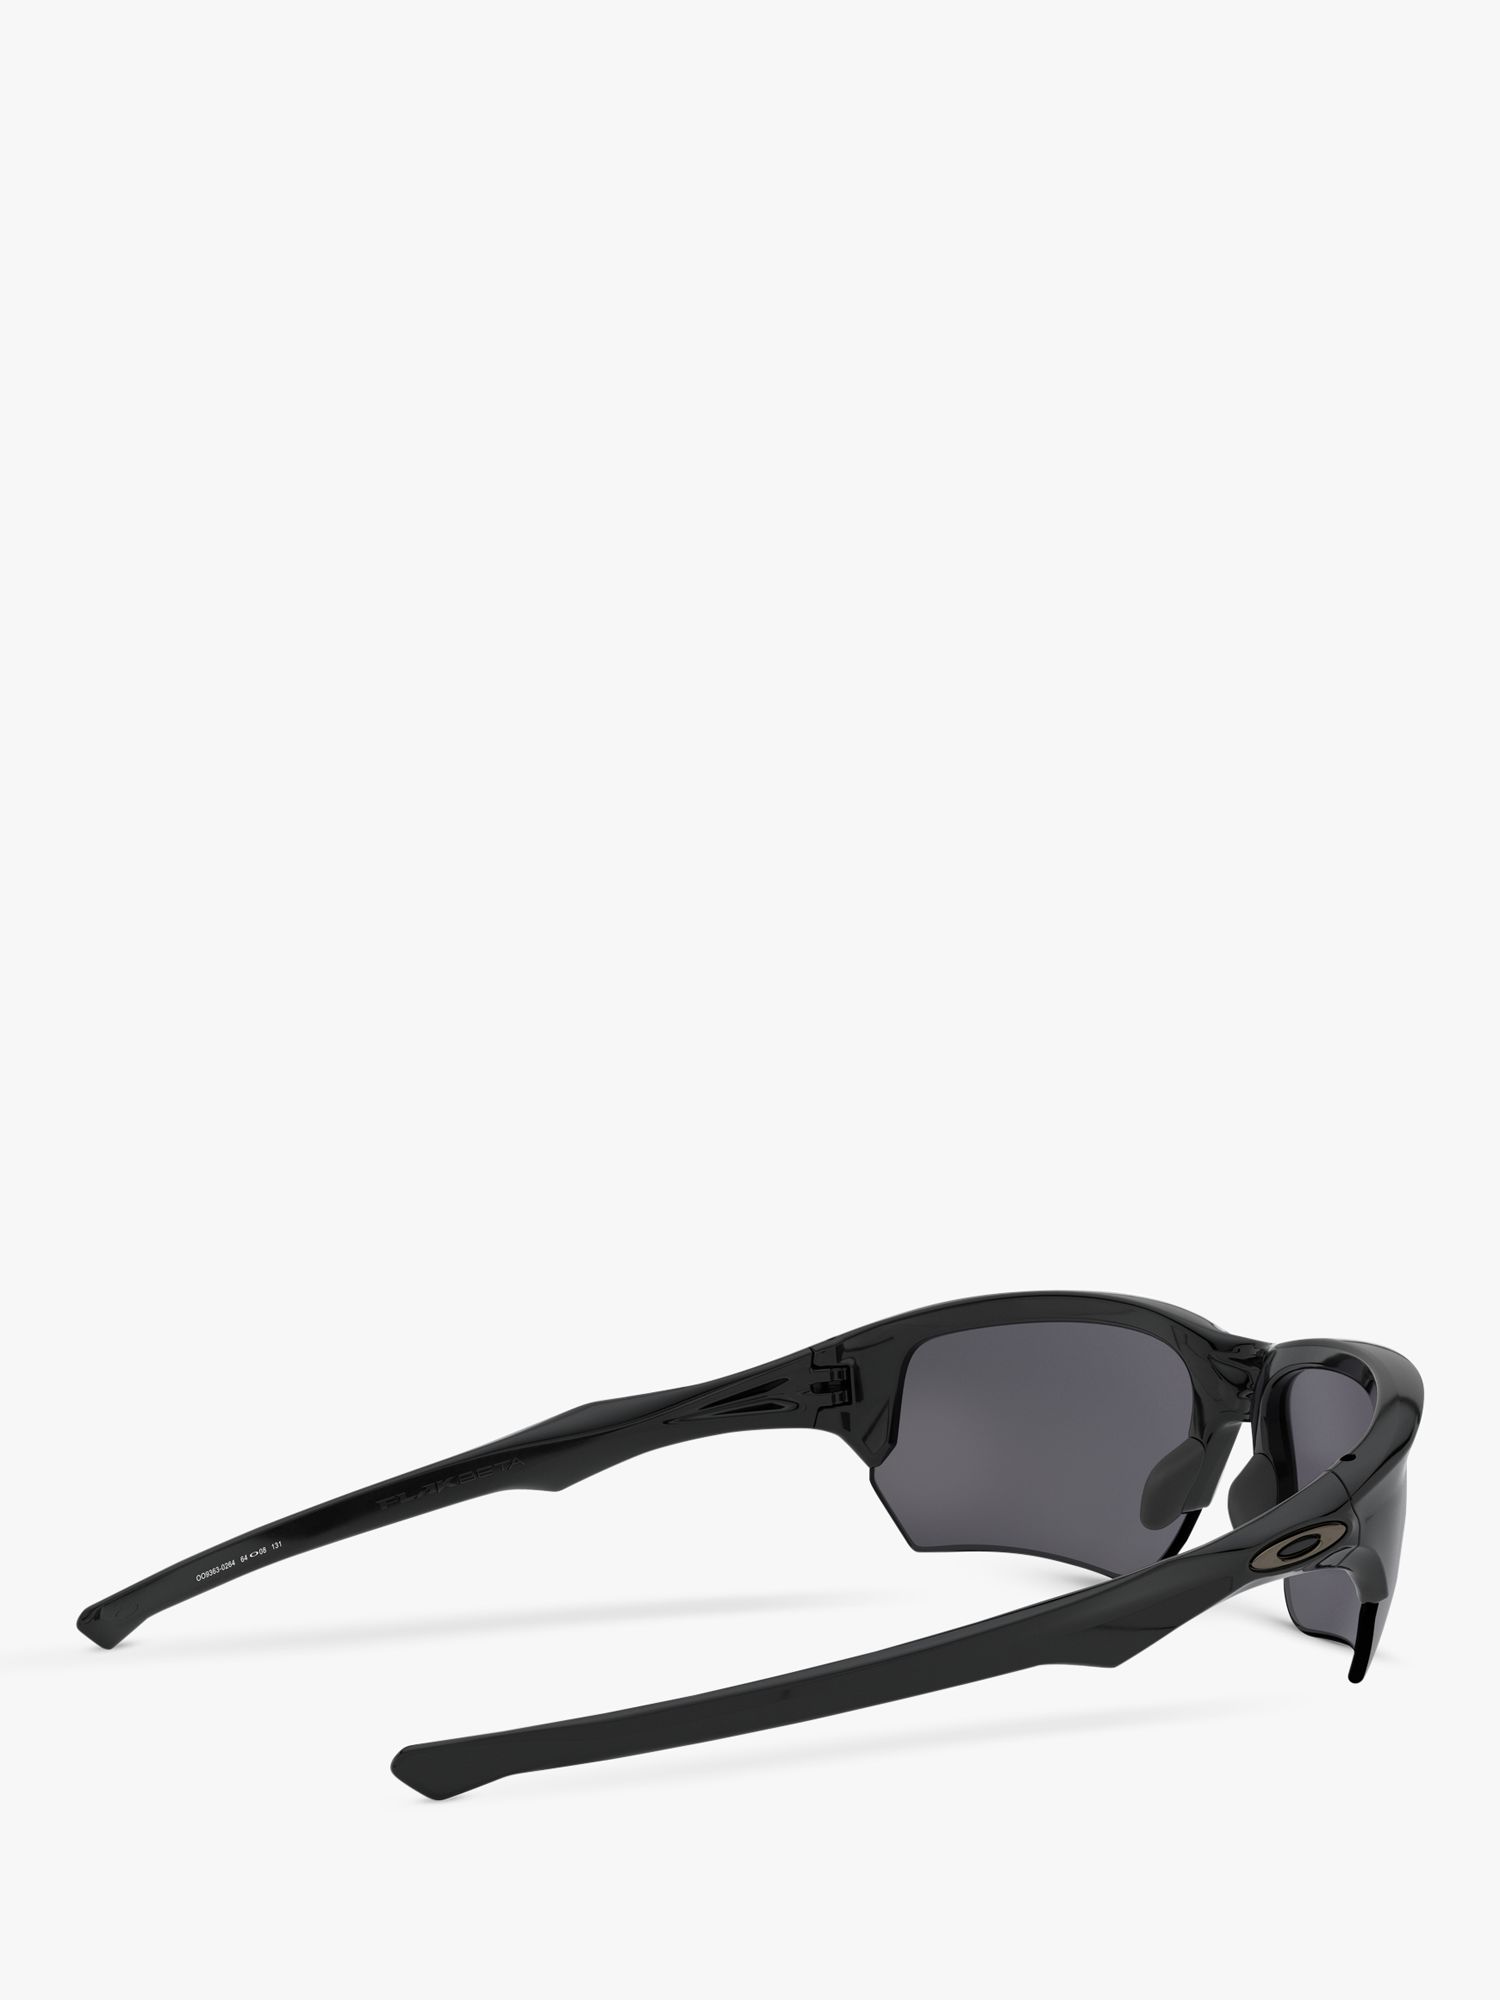 Oakley OO9363 Men's Prizm Rectangular Sunglasses, Polished Black/Grey